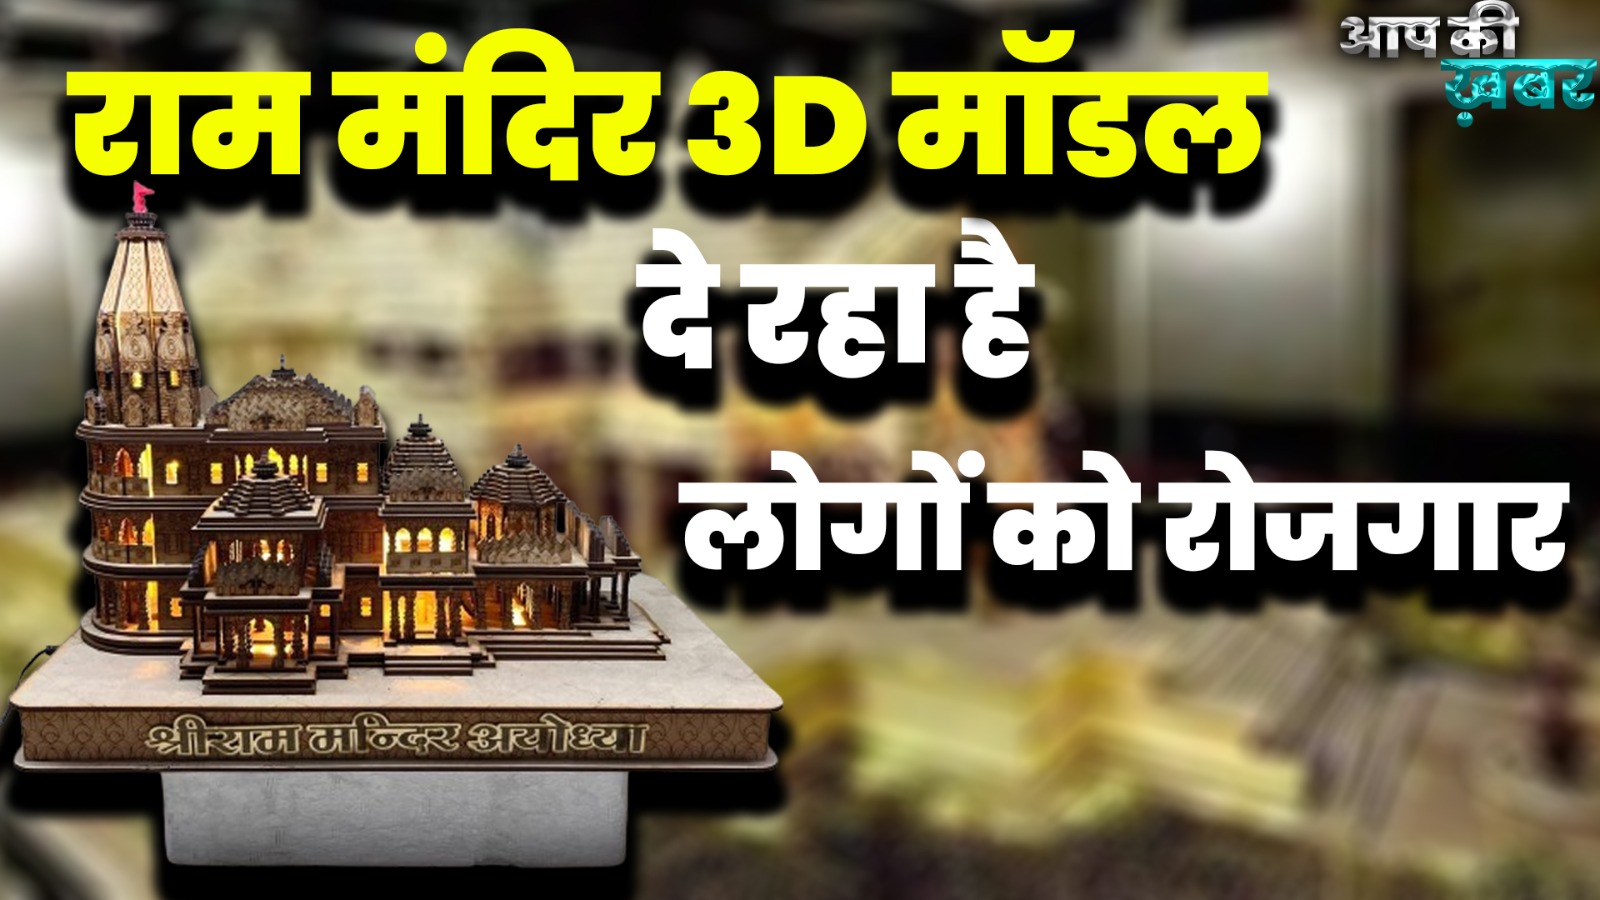 Ram Mandir 3D Model | Employment Generated by Ram Mandir | राम मंदिर ने दिया रोजगार